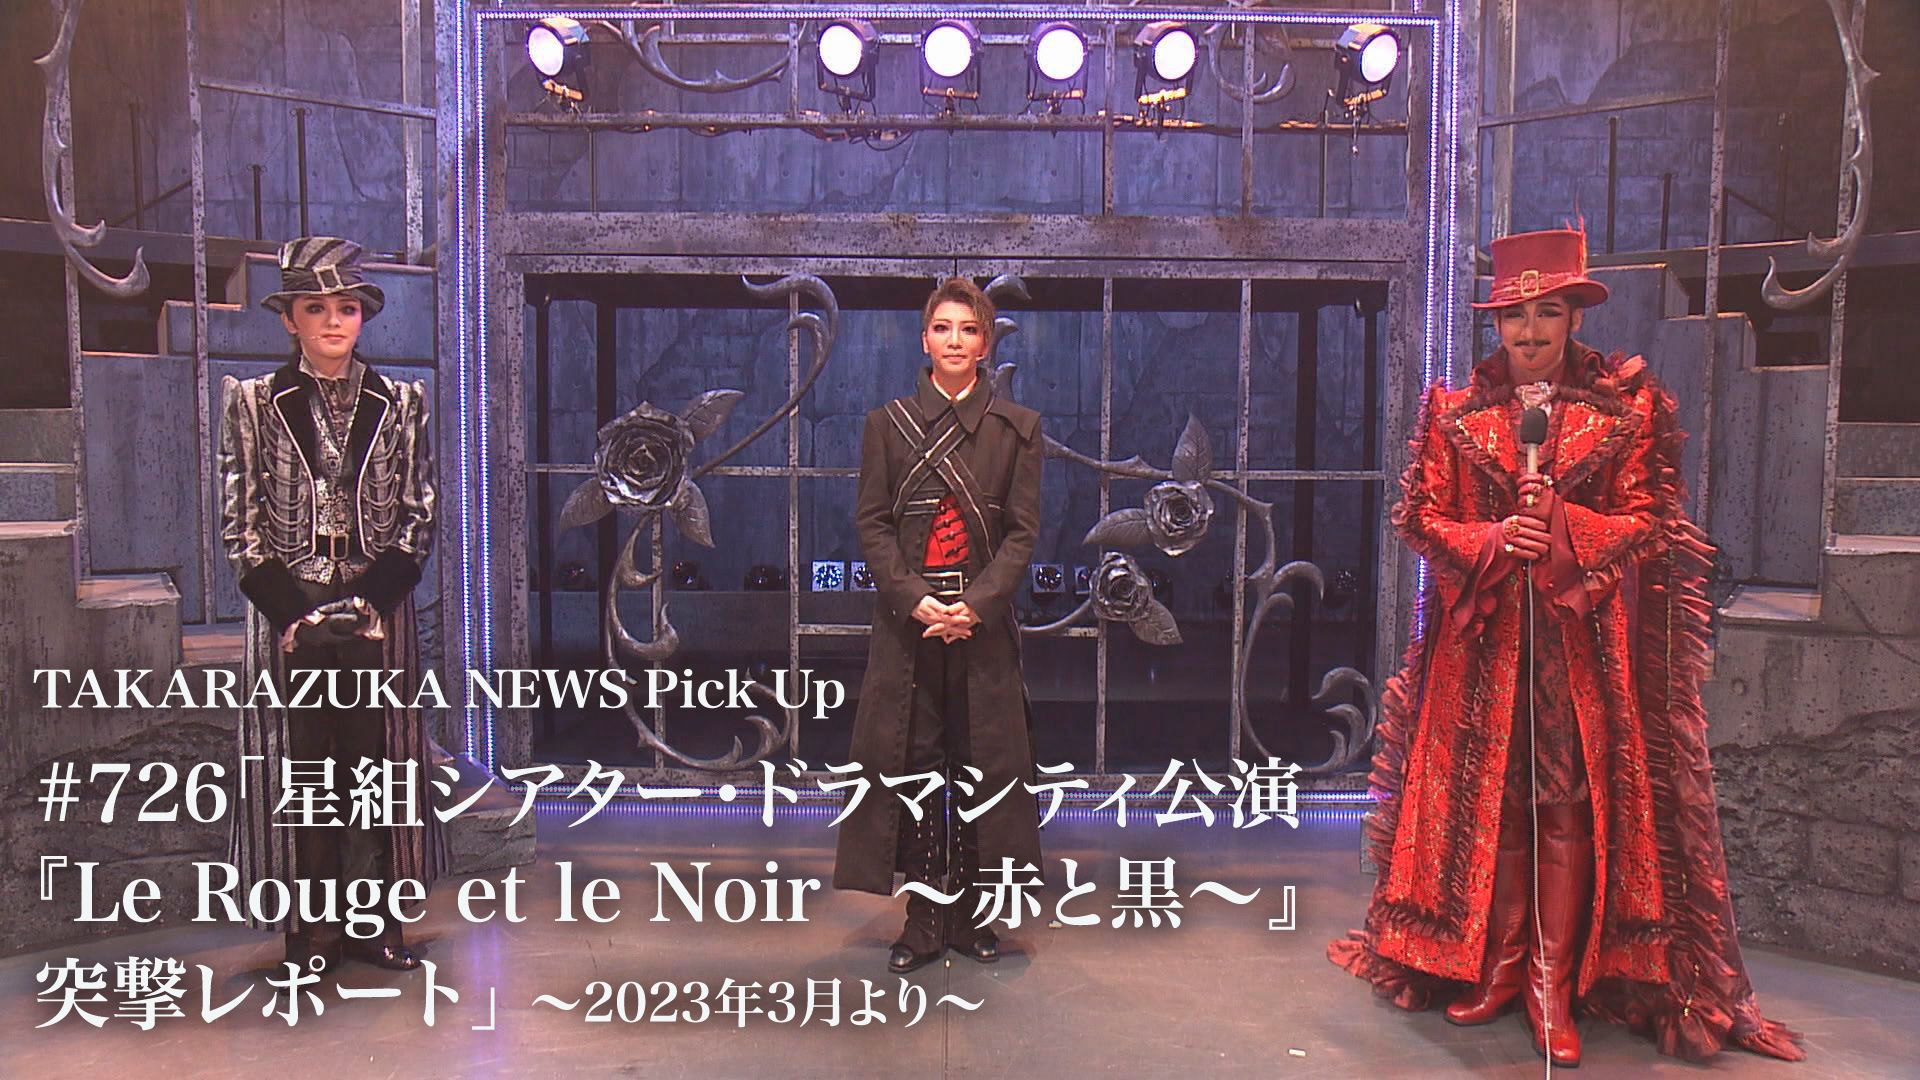 TAKARAZUKA NEWS Pick Up #726「星組シアター・ドラマシティ公演『Le Rouge et le Noir 〜赤と黒〜』突撃レポート」〜2023年3月より〜